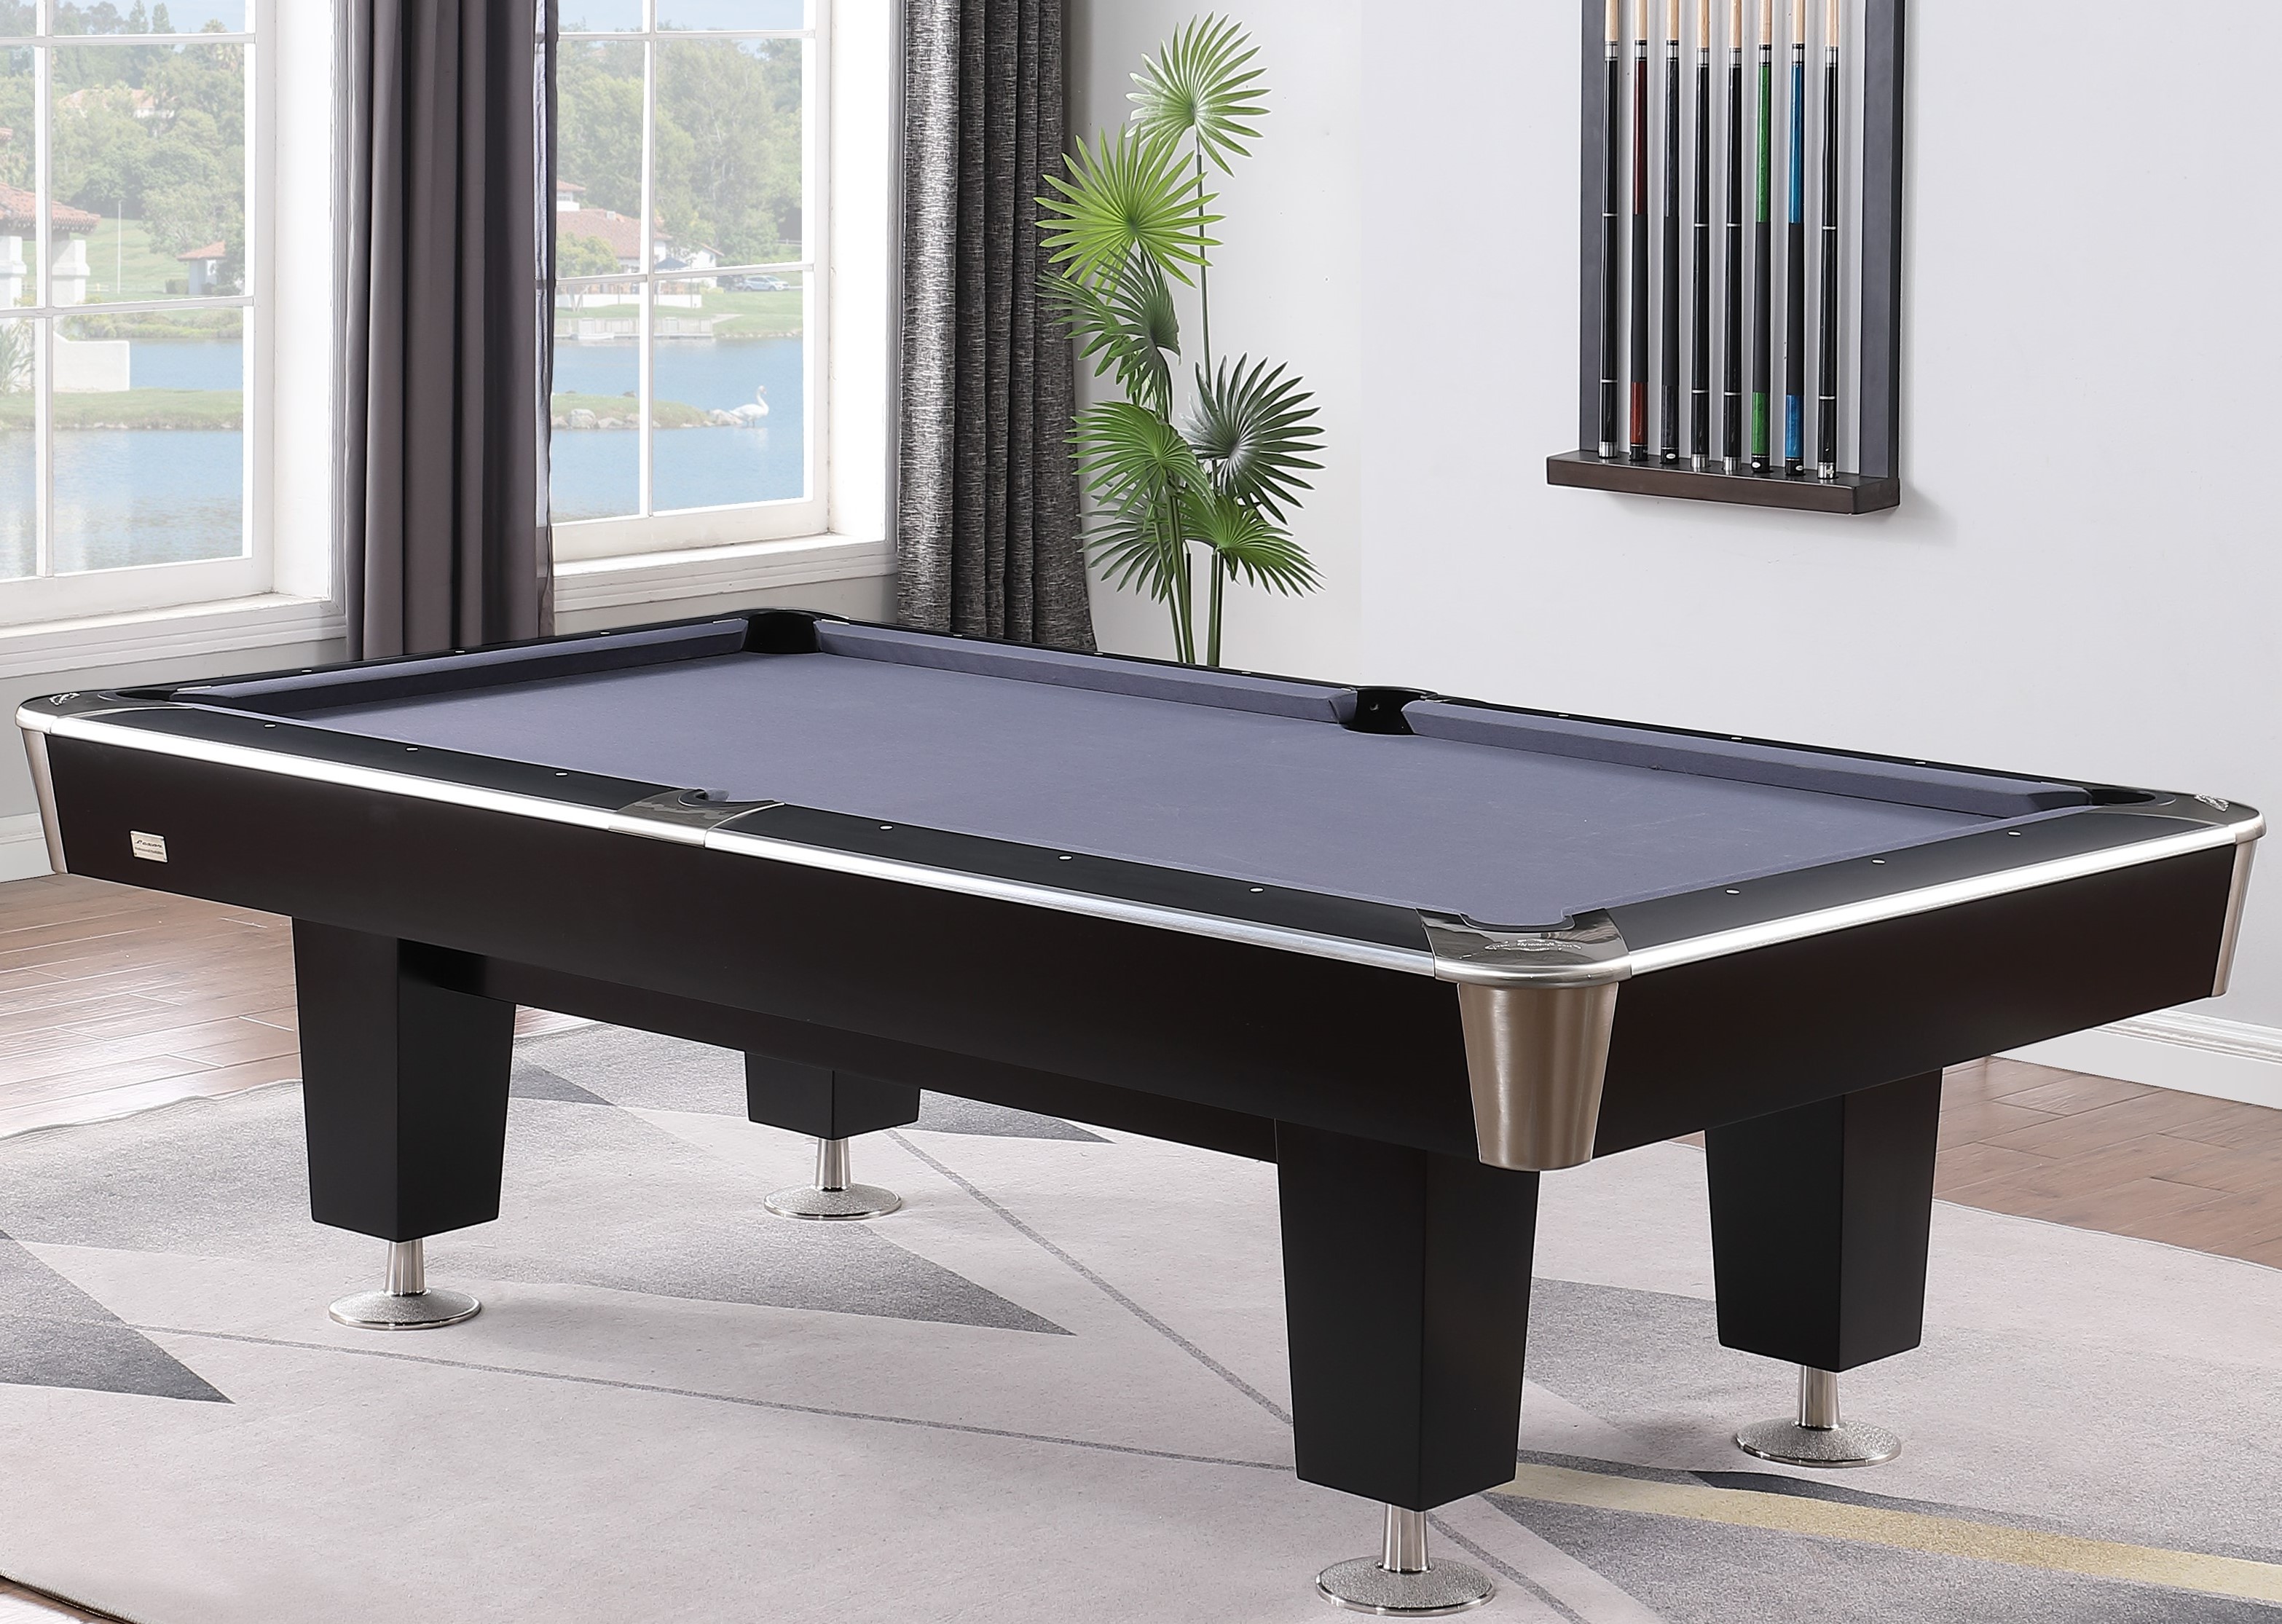 SC0110-PR: Snookertafel Lexor X-treme II Pro-series EPBF pockets, black-RVS 